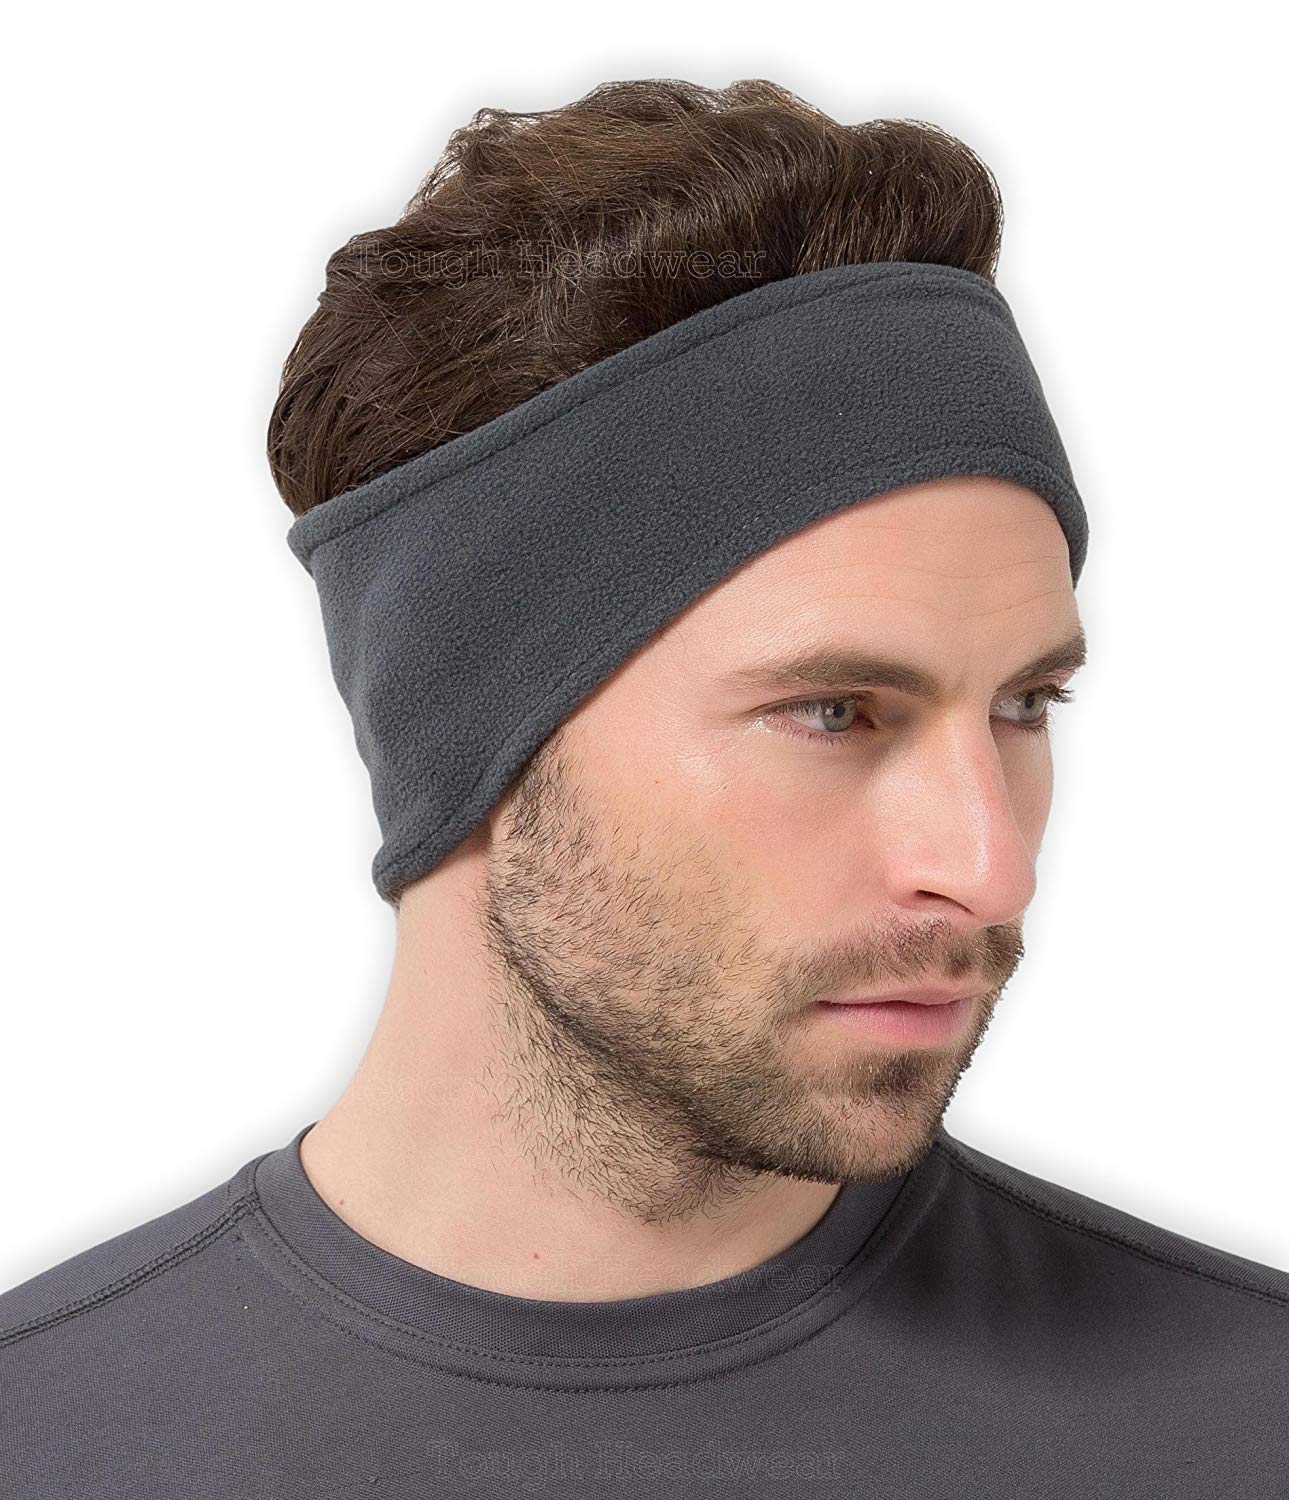 Tough Headwear Ear Warmer Headband - Ear Muffs - Running Winter Headband,  Fleece Headband for Men & Women for Cold Weather